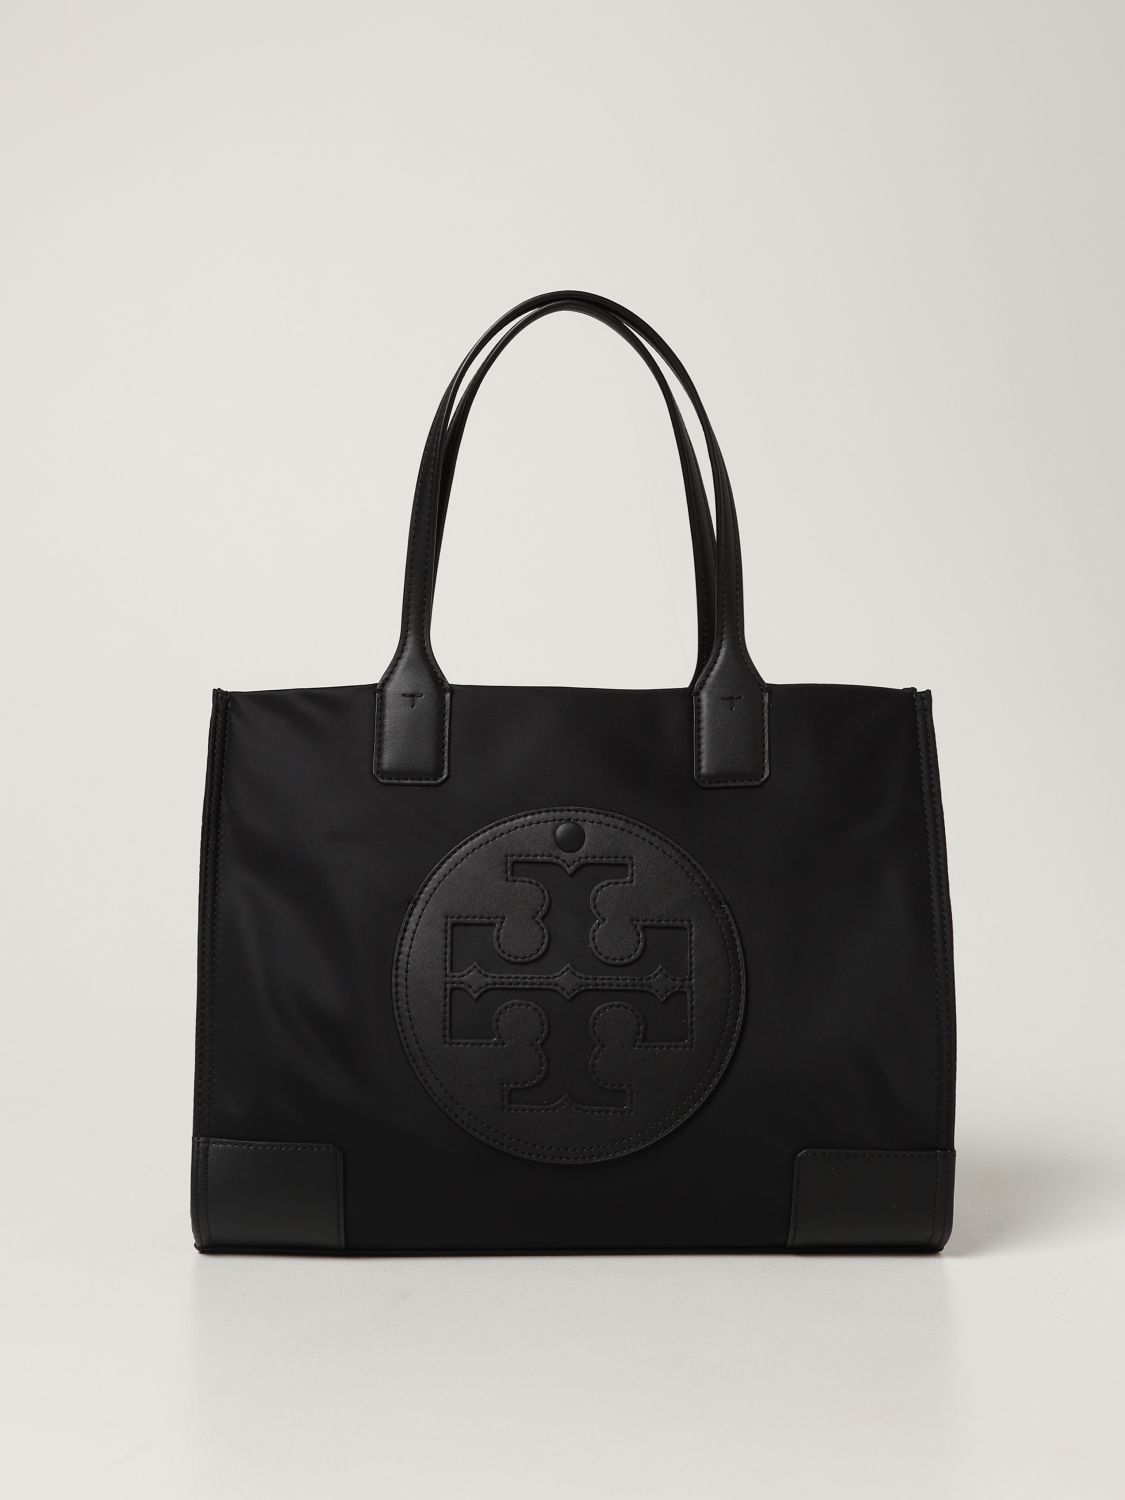 TORY BURCH: Ella Tote nylon bag with emblem - Black | Tory Burch tote bags  88578 online on 